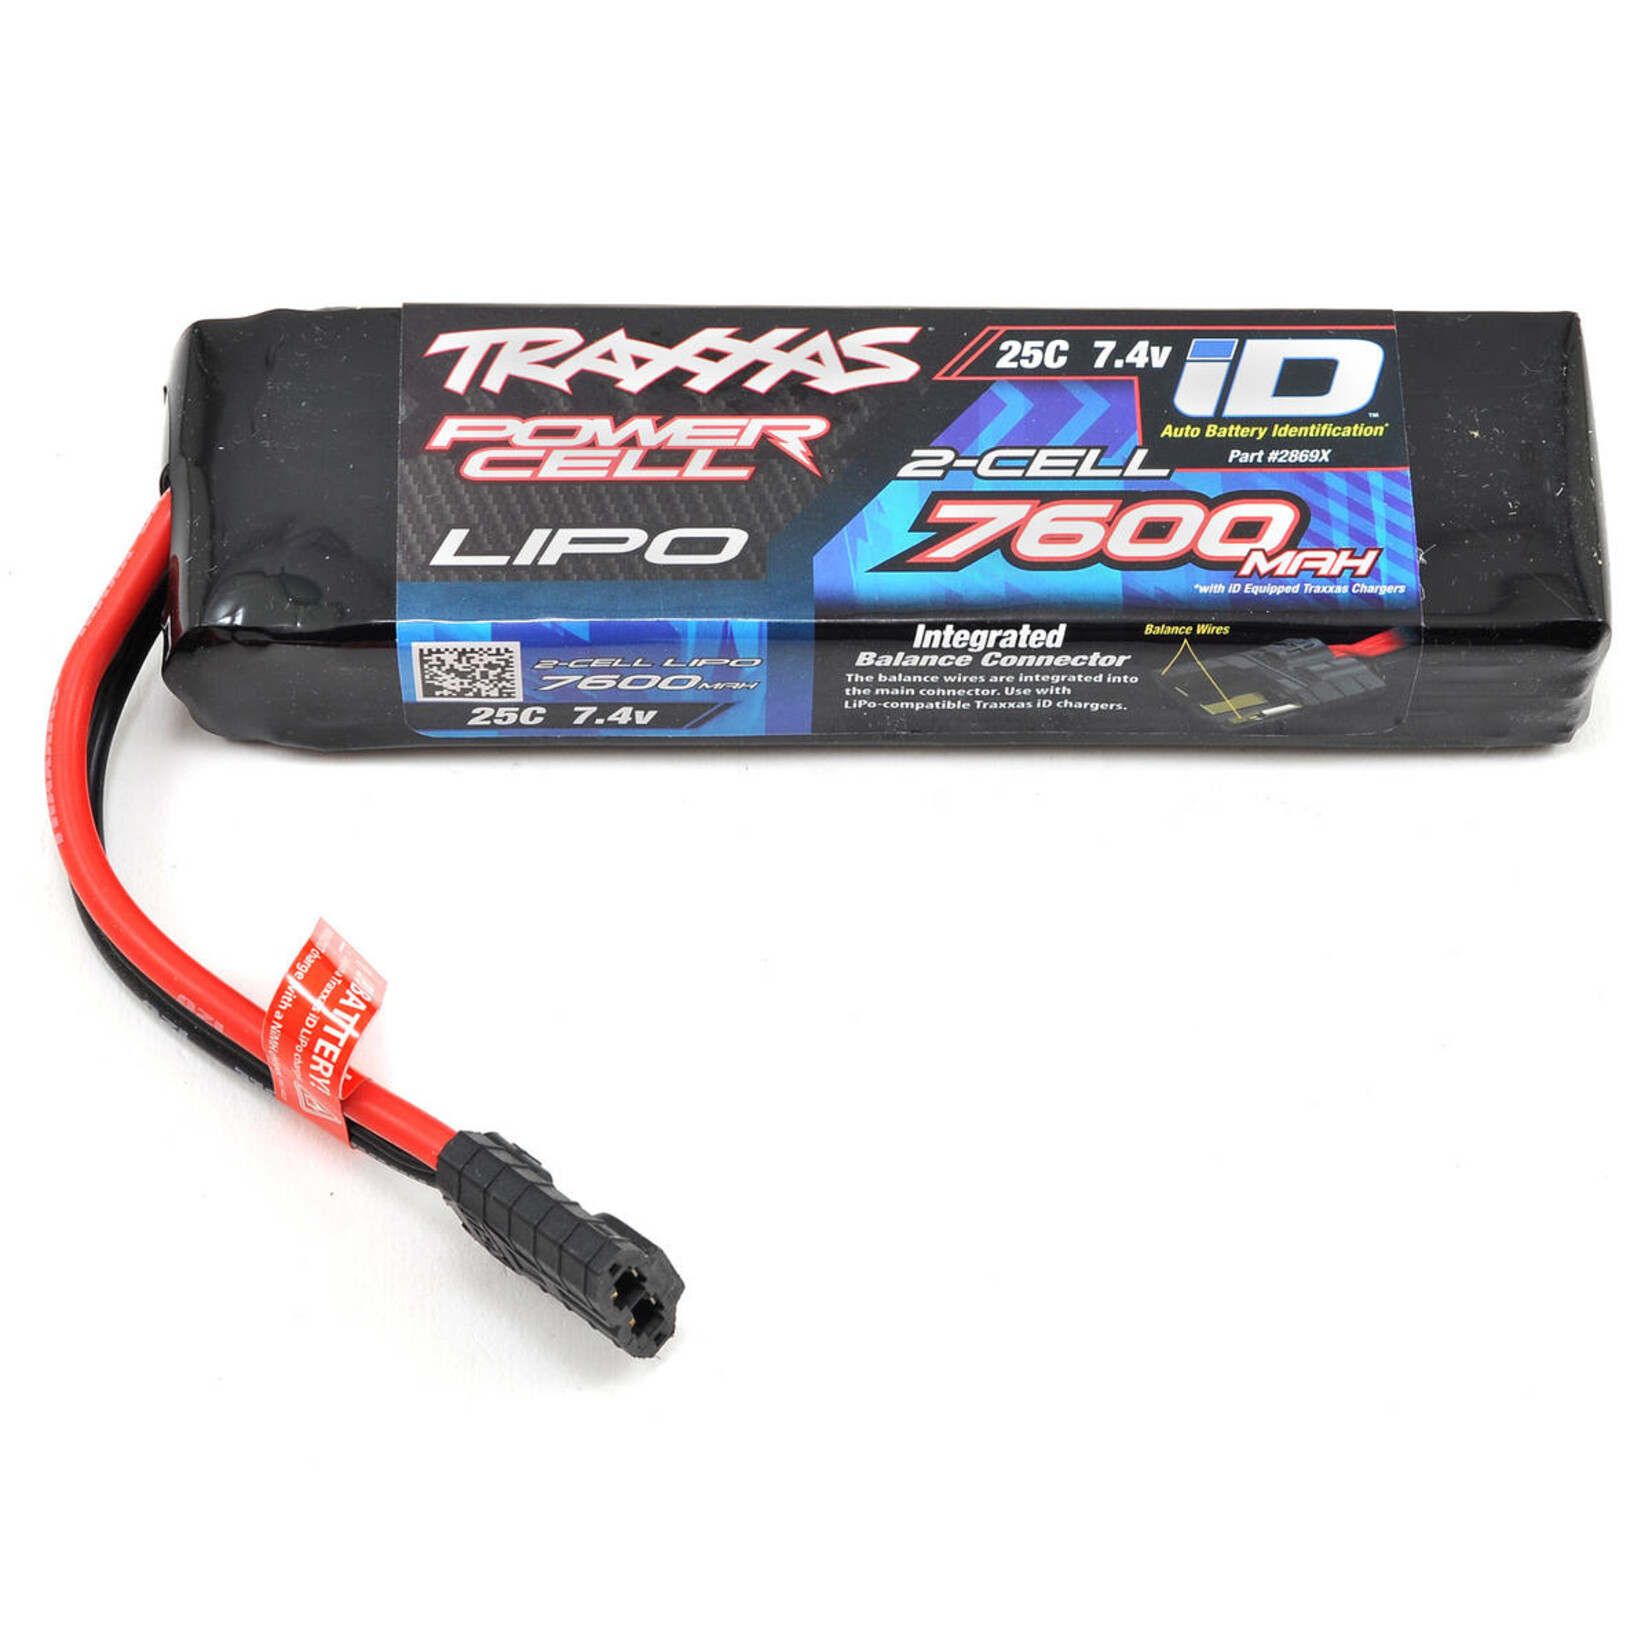 Traxxas Traxxas 2S "Power Cell" 25C LiPo Battery w/iD Traxxas Connector (7.4V/7600mAh) #2869X